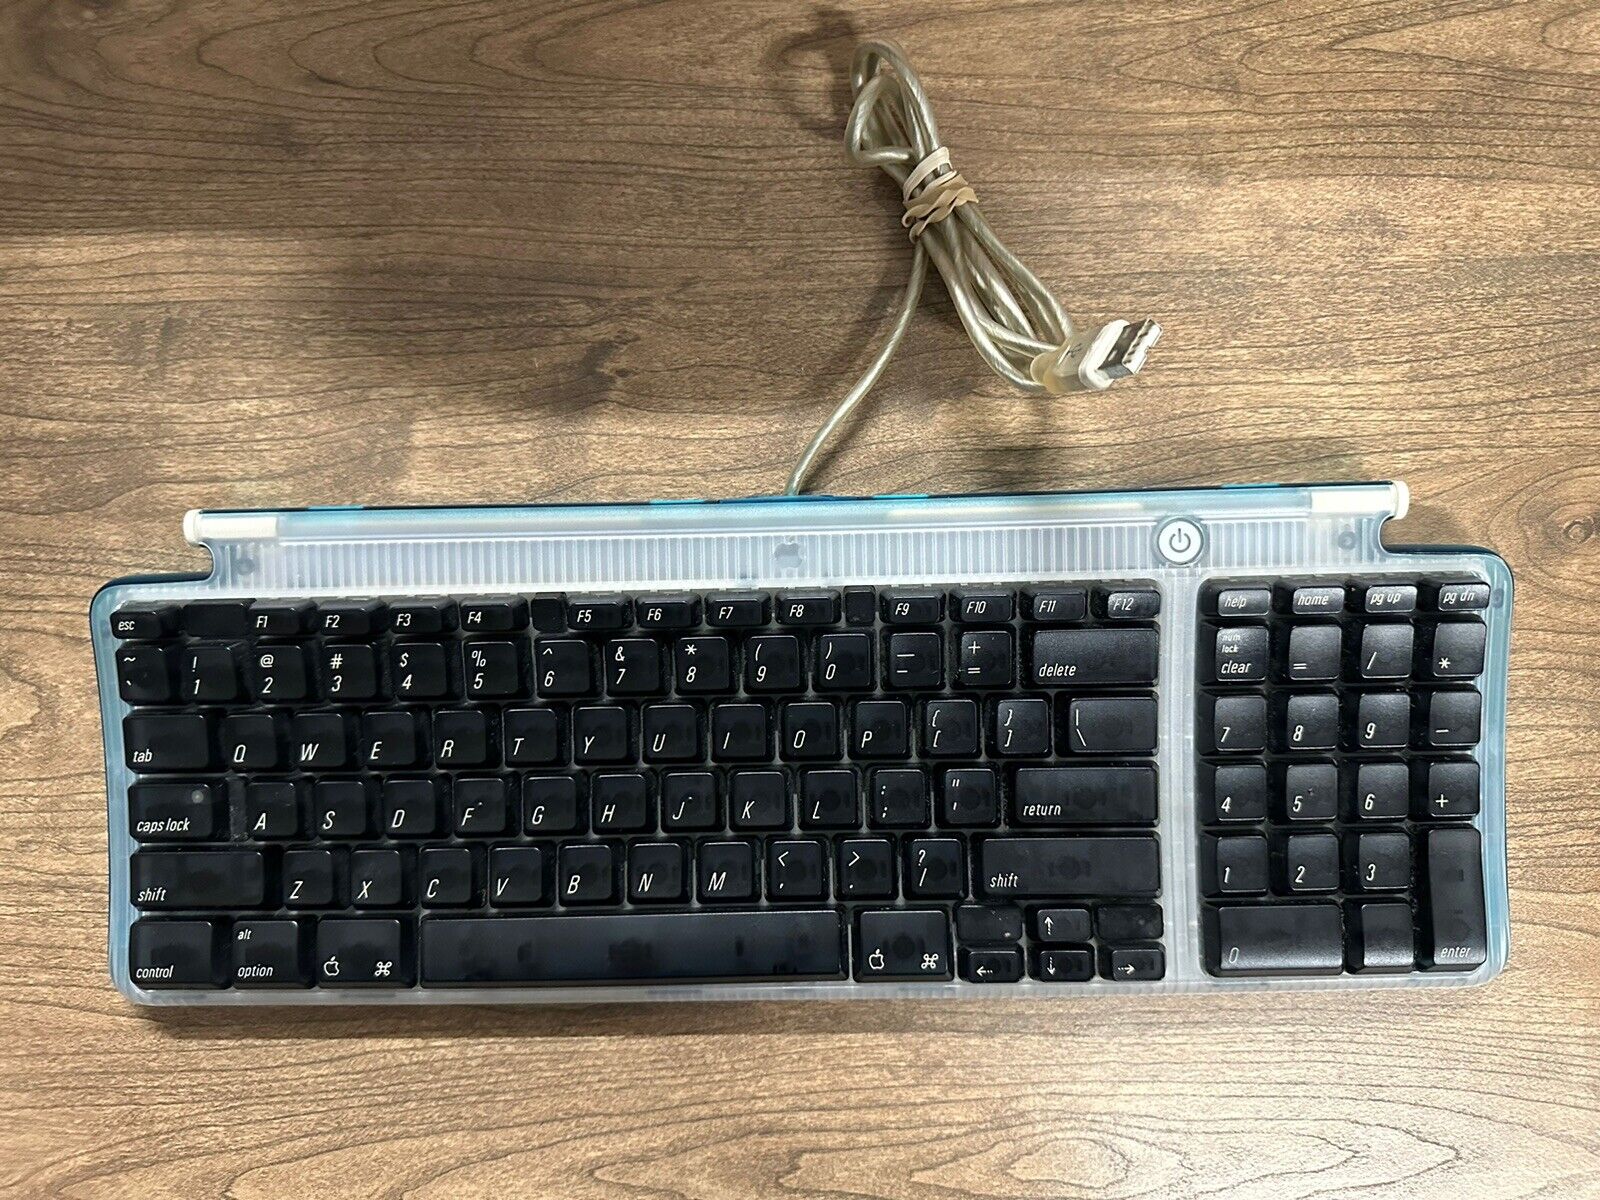 Vintage Apple USB Keyboard Bondi Blue Teal Mac G3 G4 G5 M2452 Tested And Working